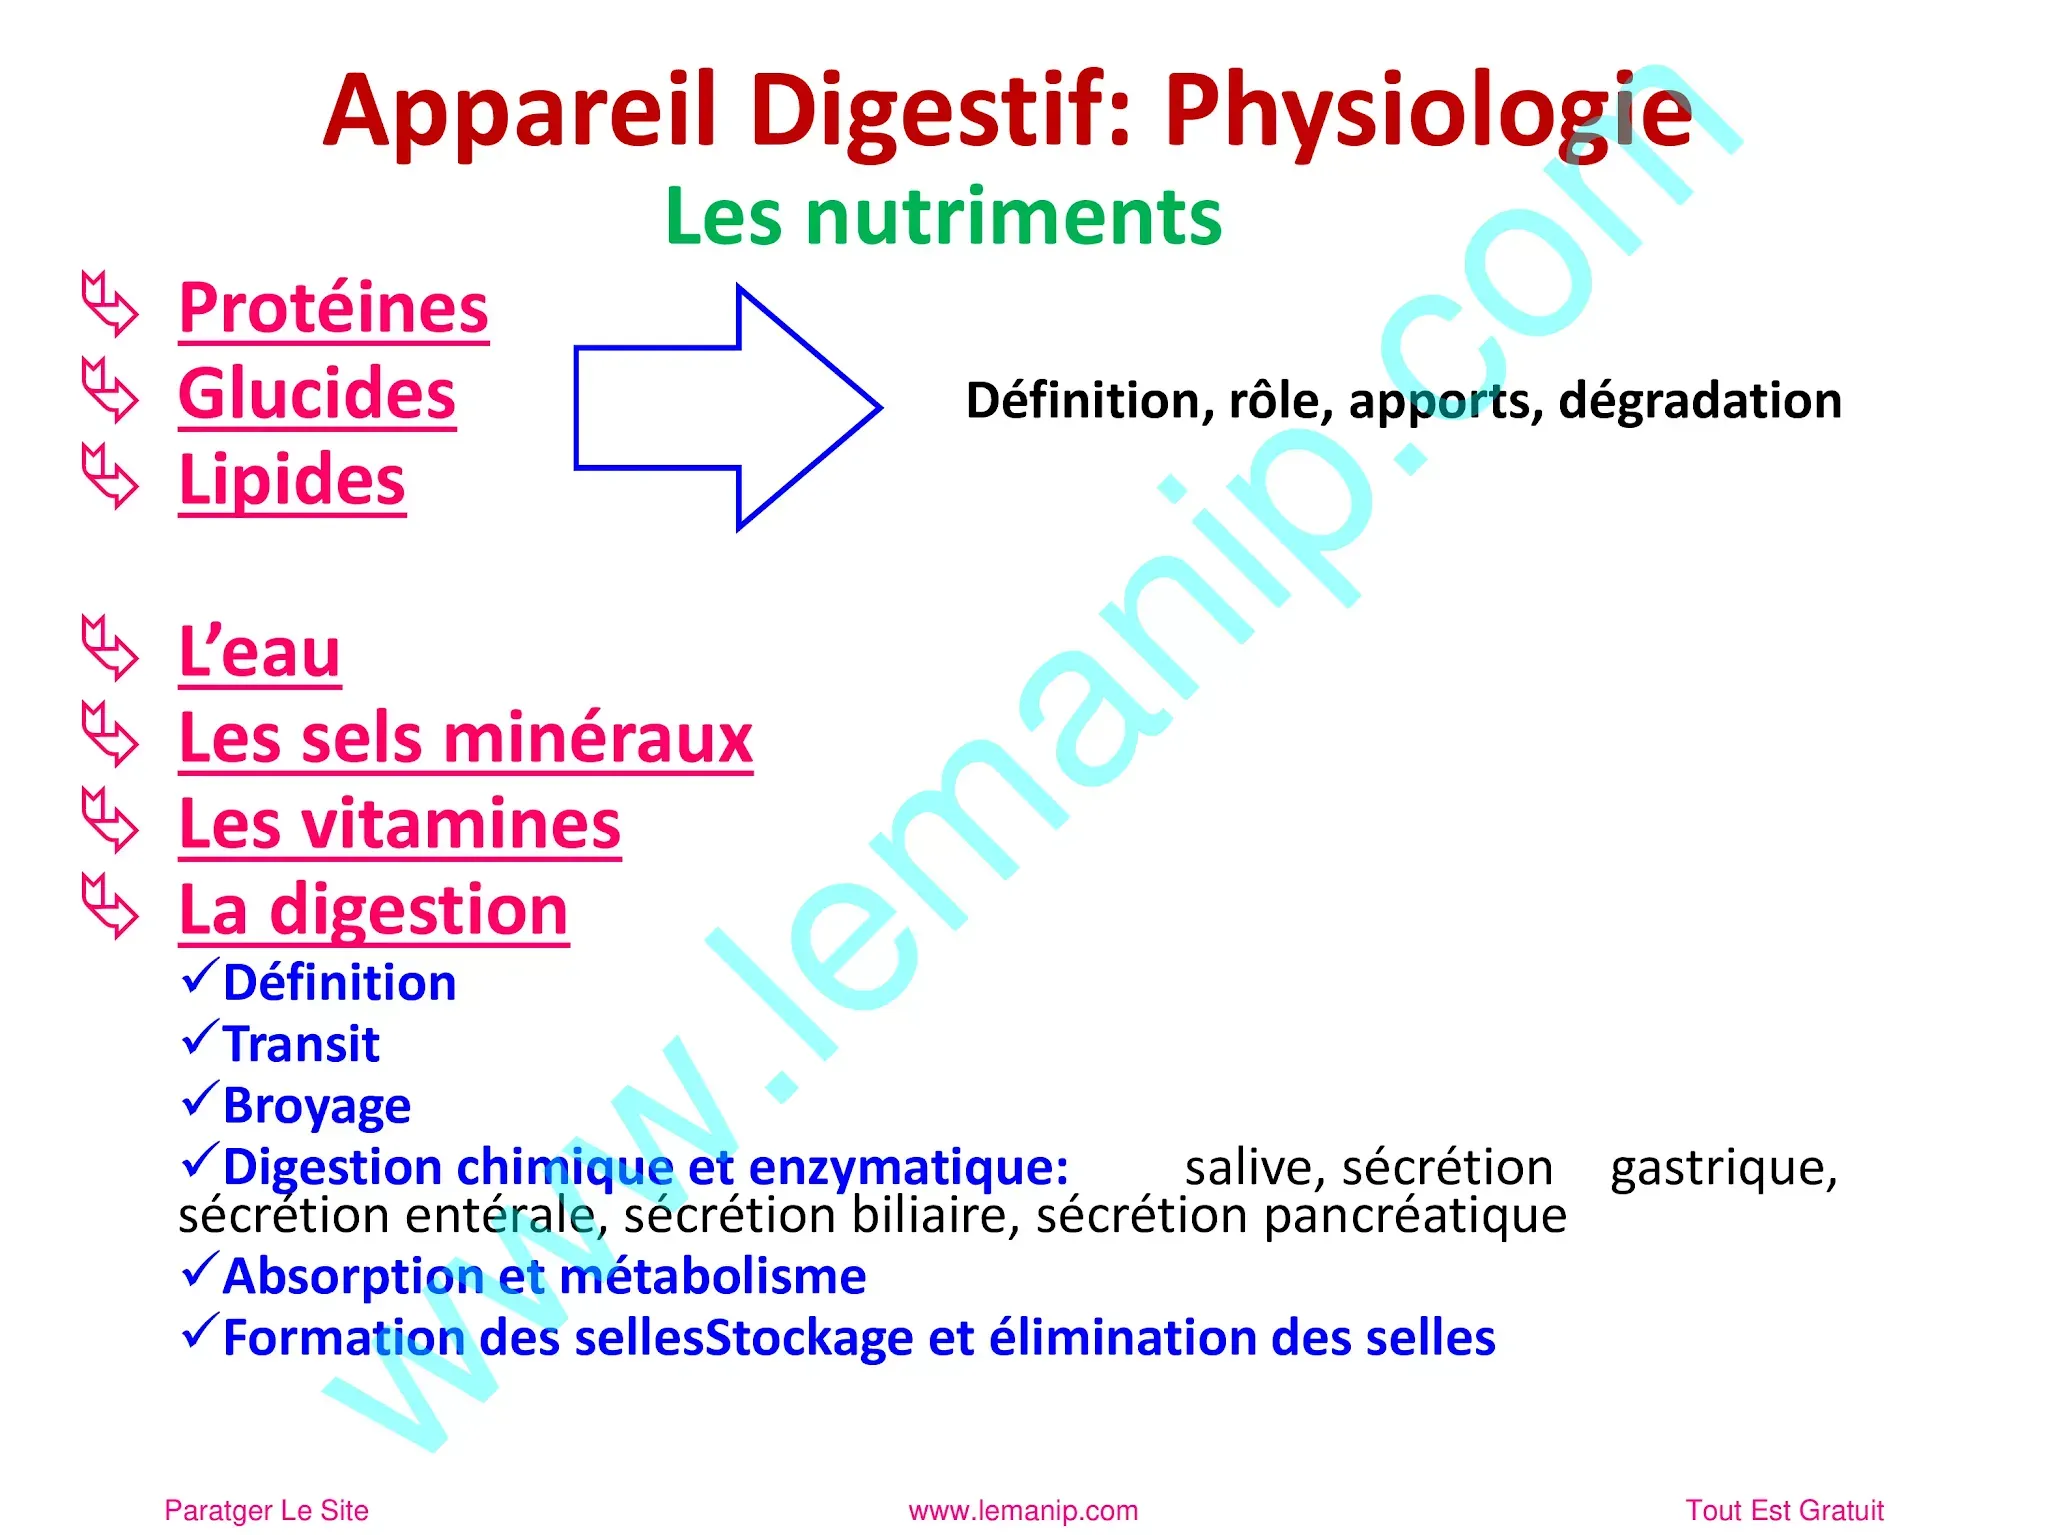 Appareil Digestif et Physiologie